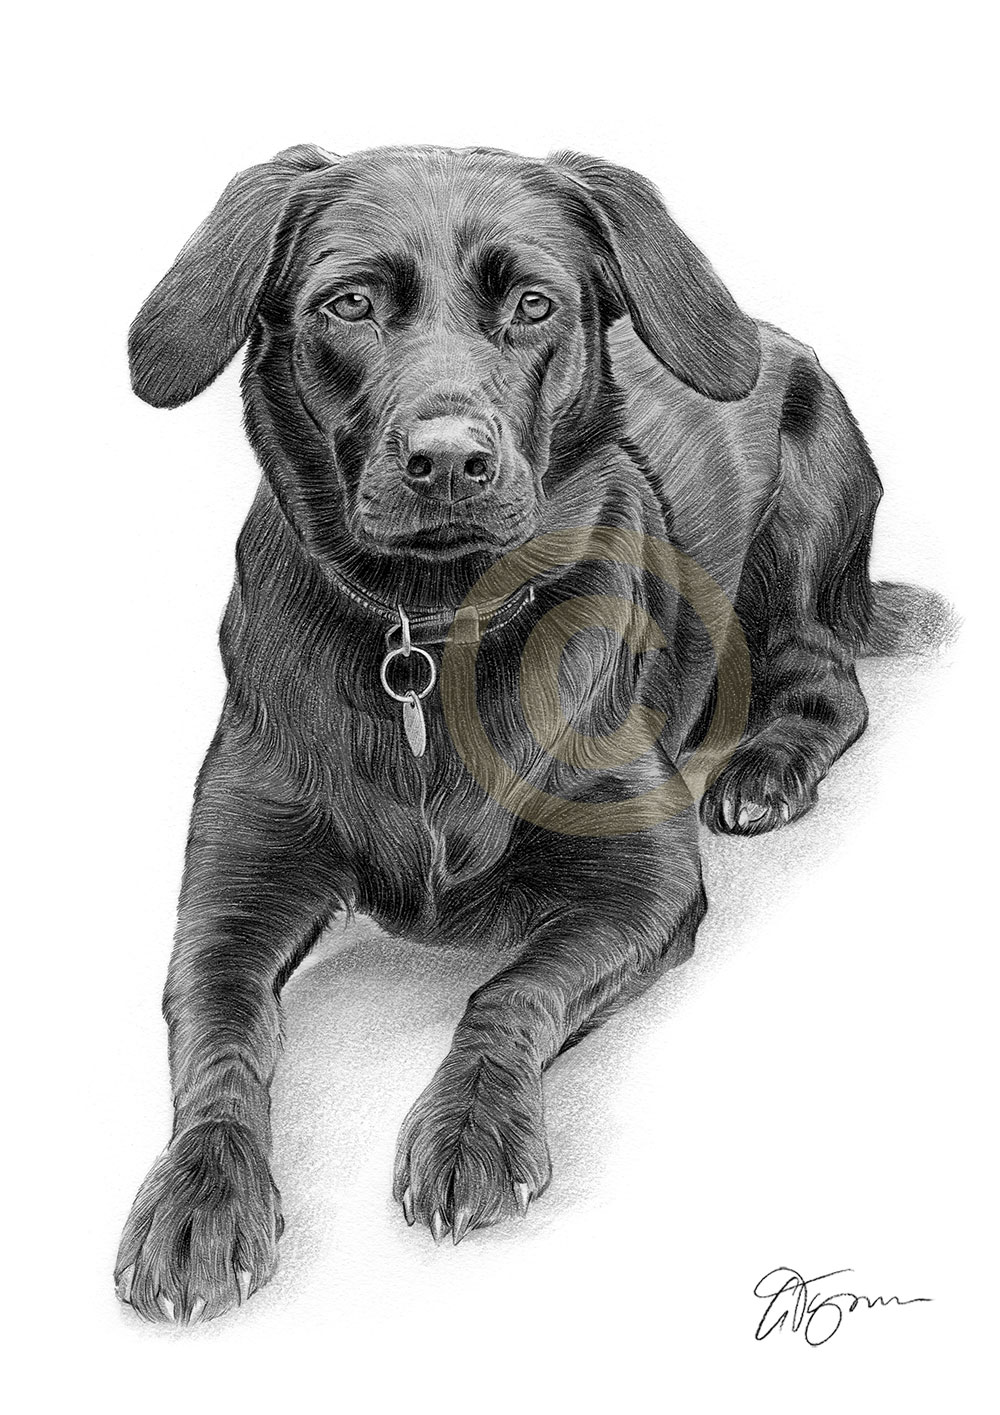 Pet portrait commission of a black labrador by artist Gary Tymon